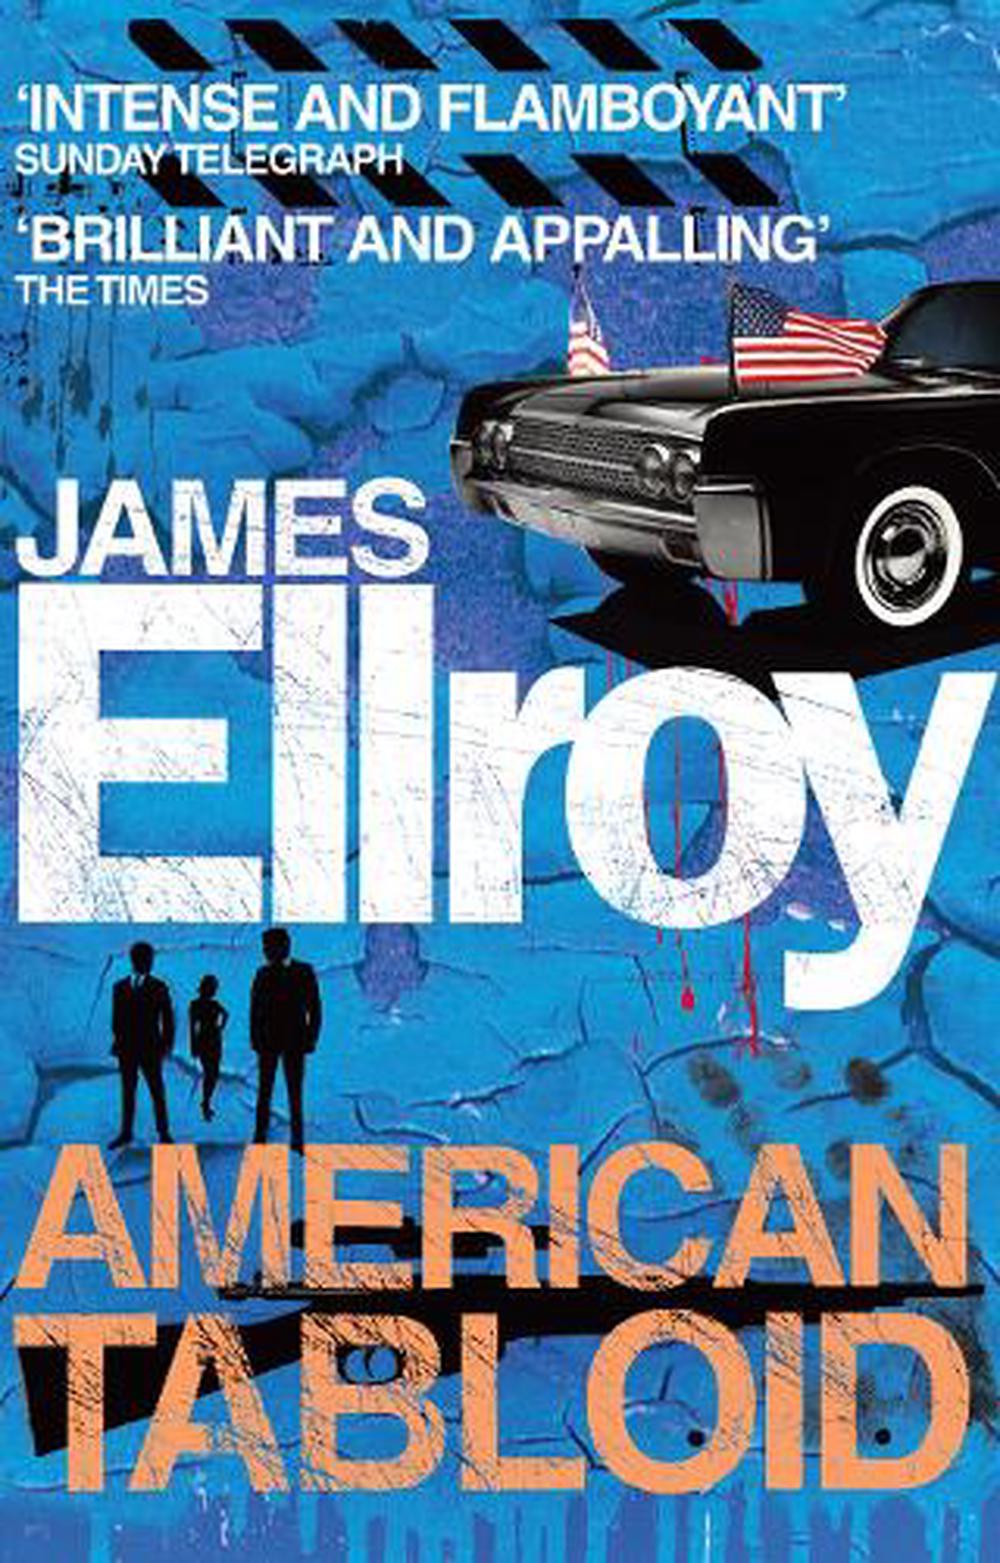 American Tabloid by James Ellroy, Paperback, 9780099537823 Buy online